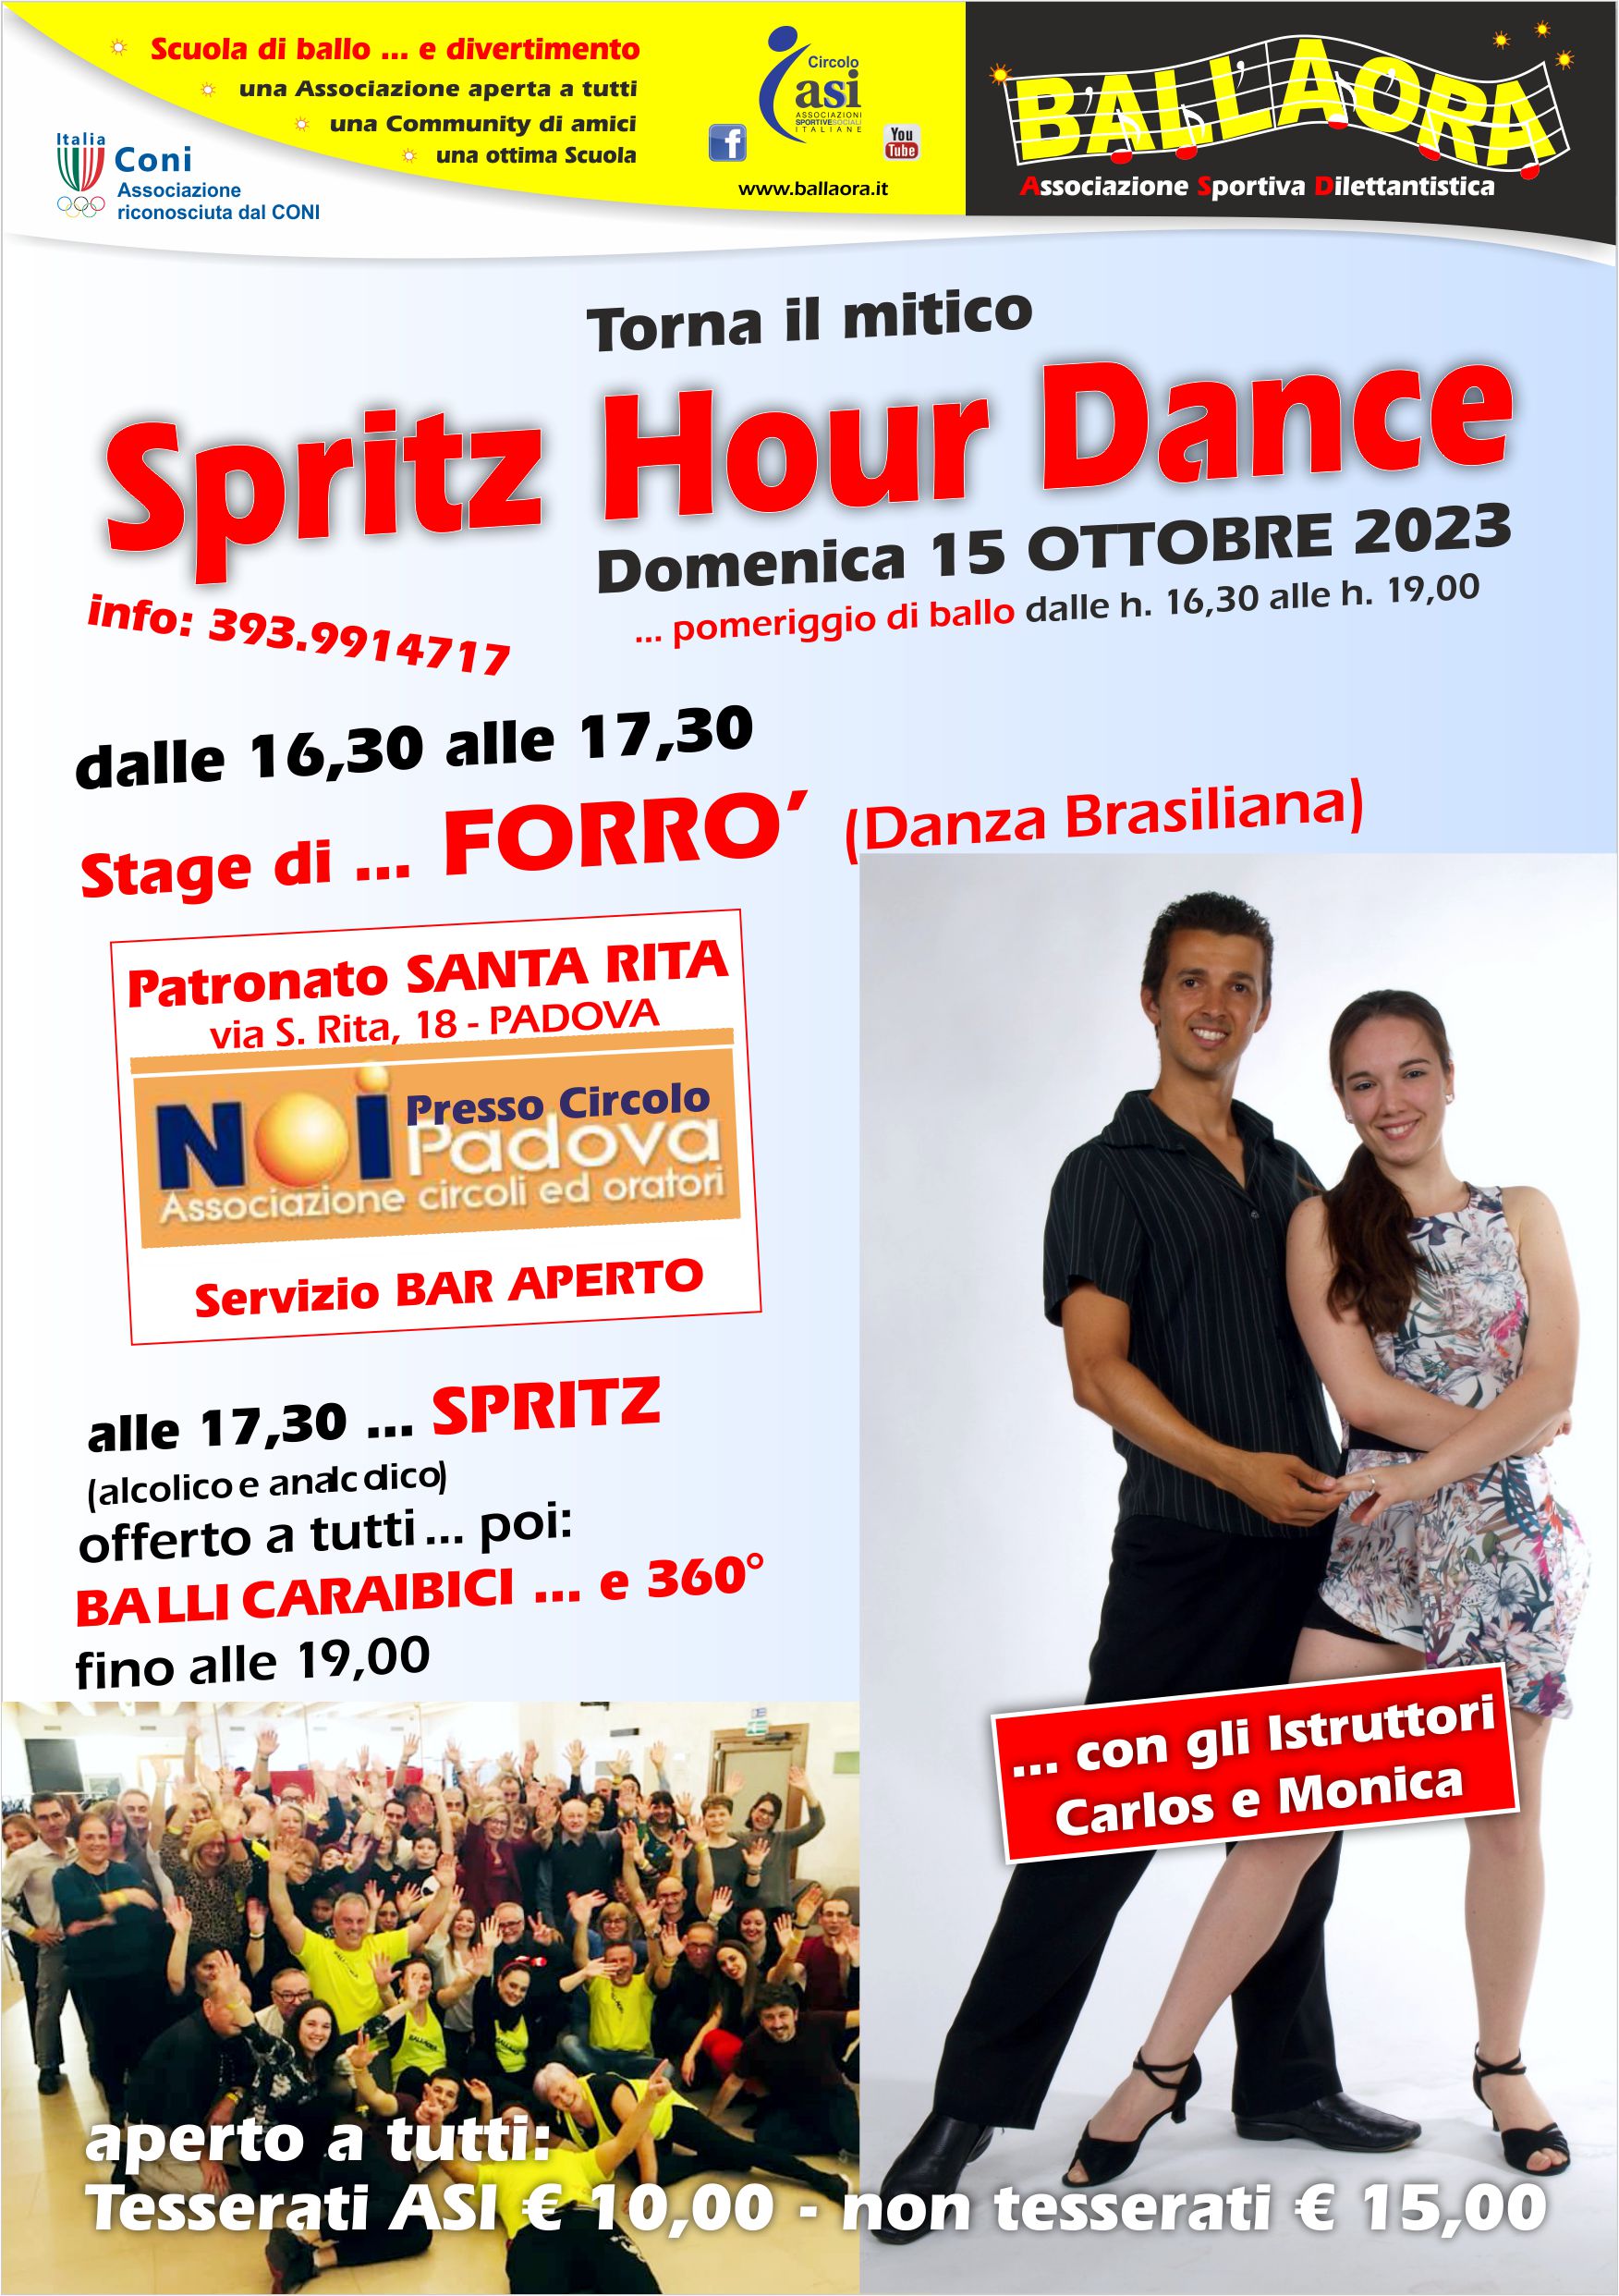 Spritz Hour Dance 15.10.2023 Patronato S. RITA